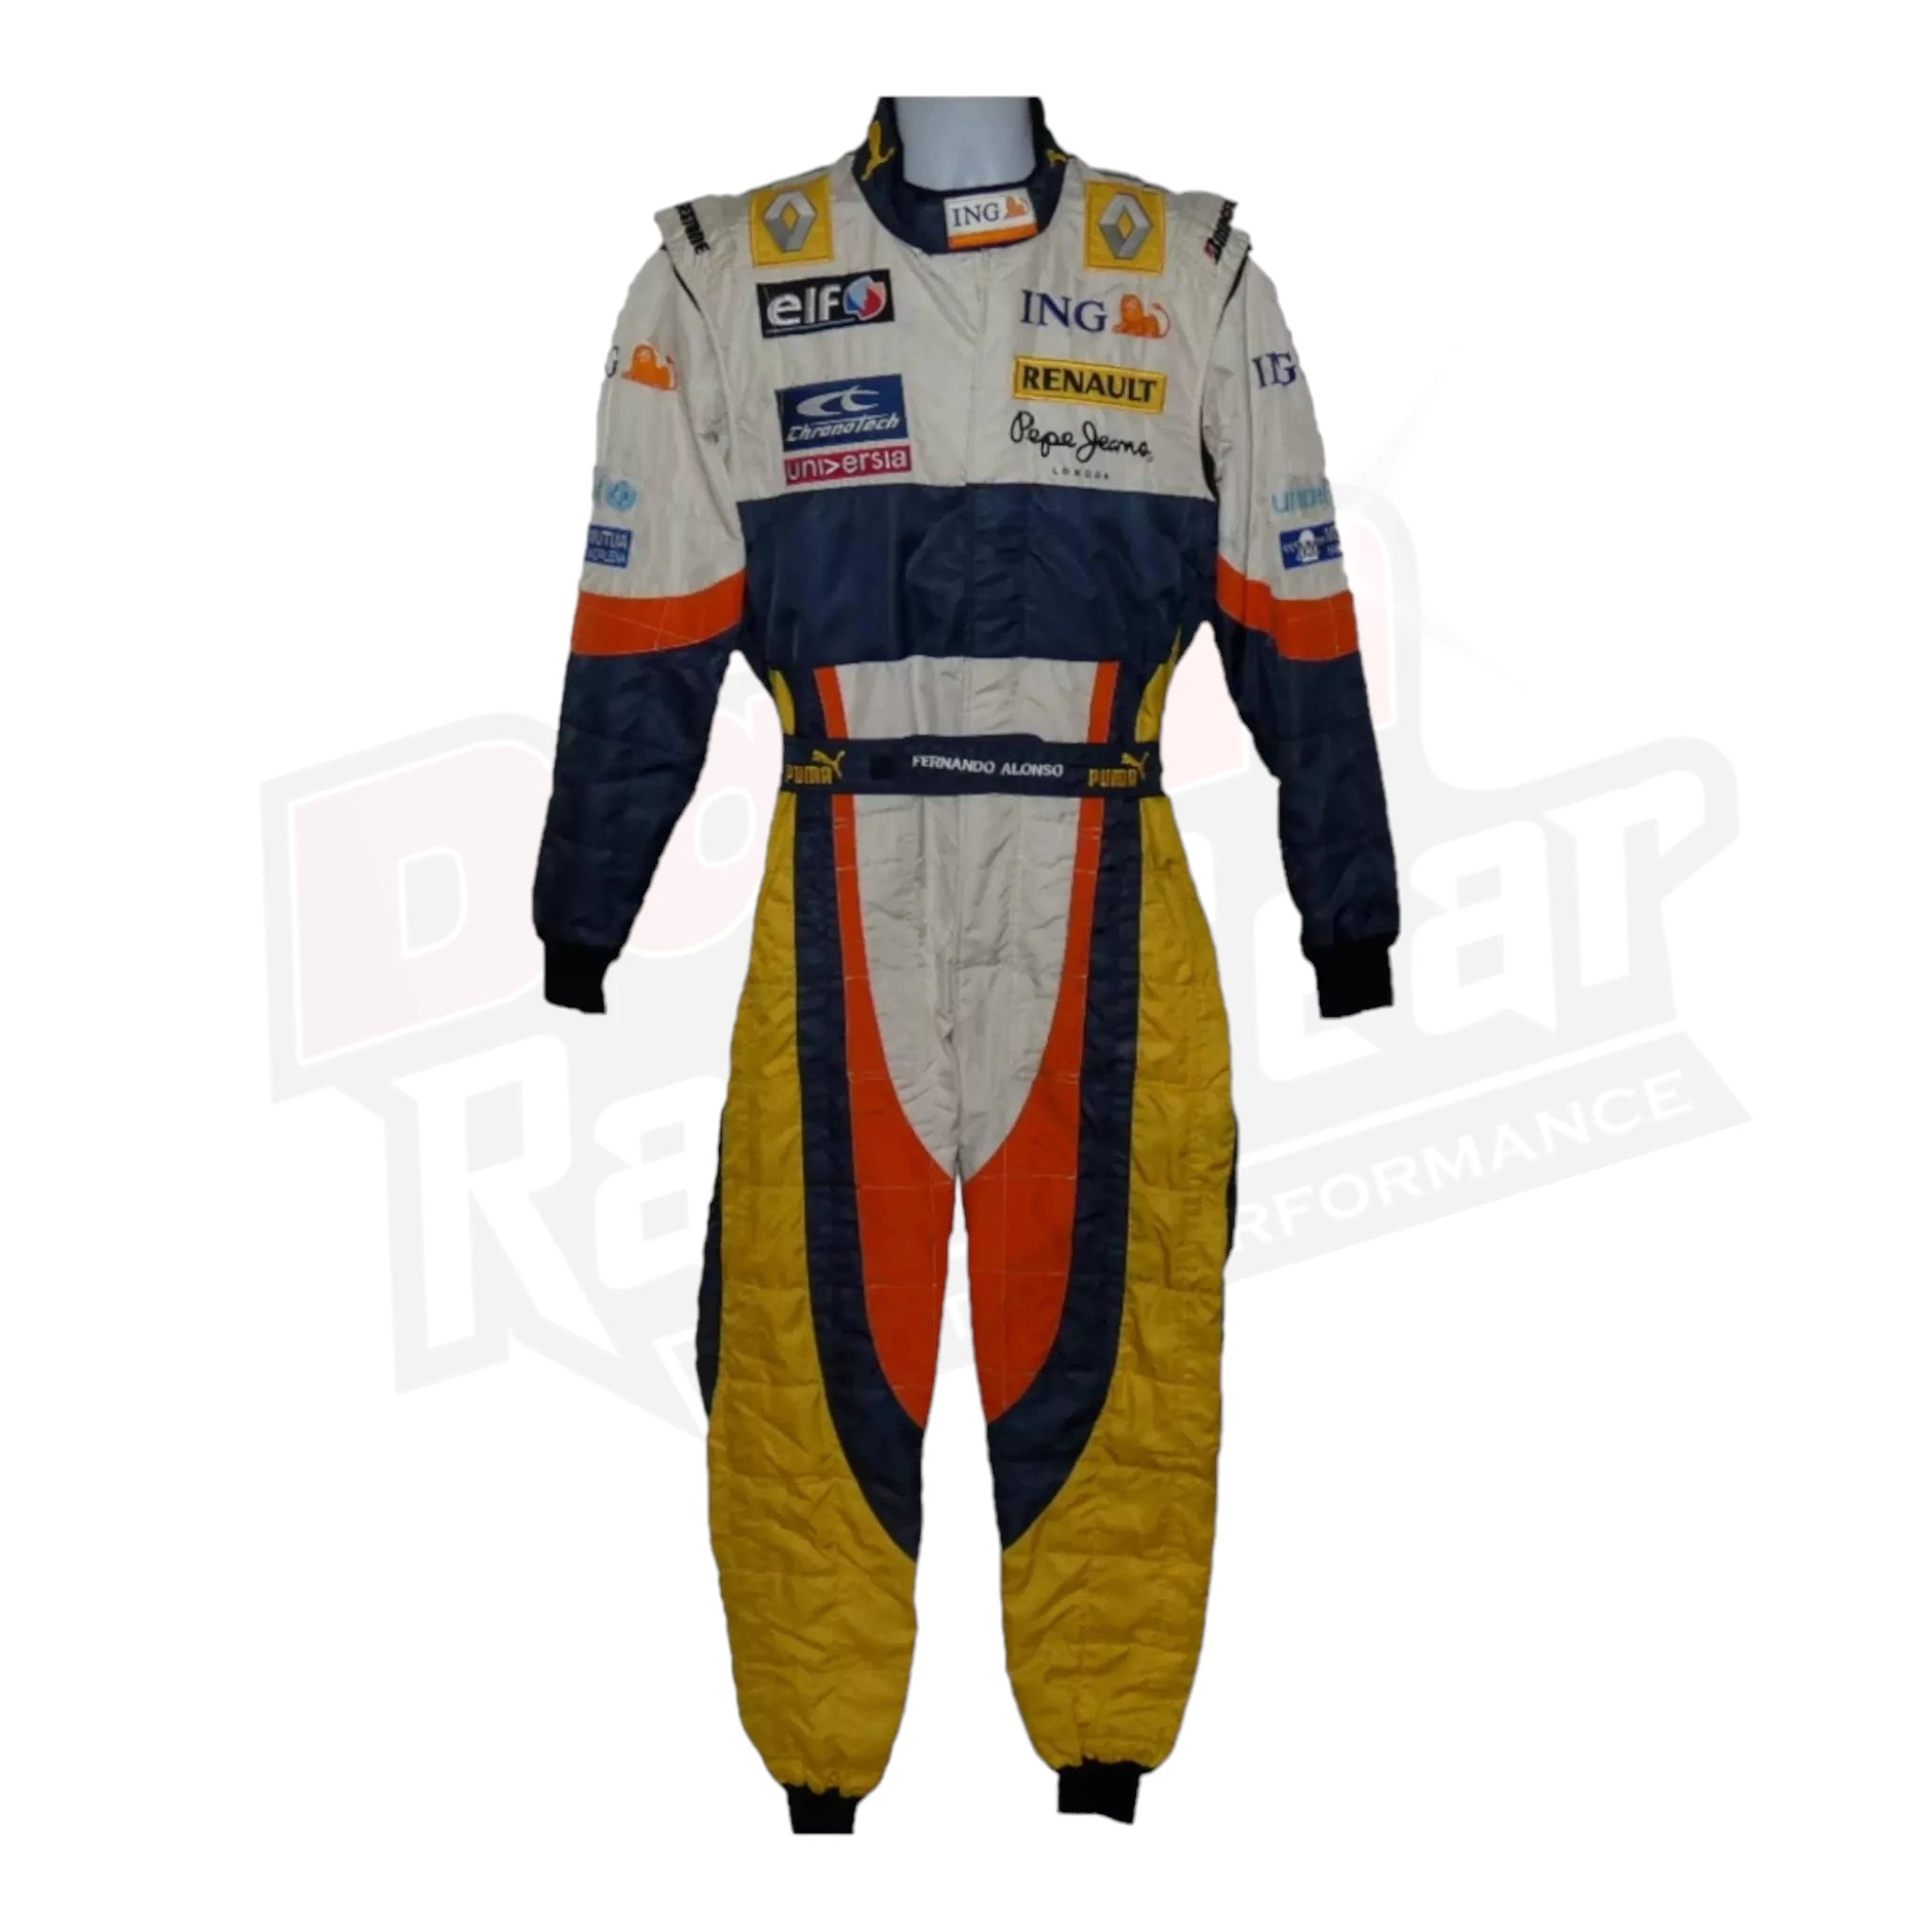 Fernando Alonso 2008 Renault F1 race suit